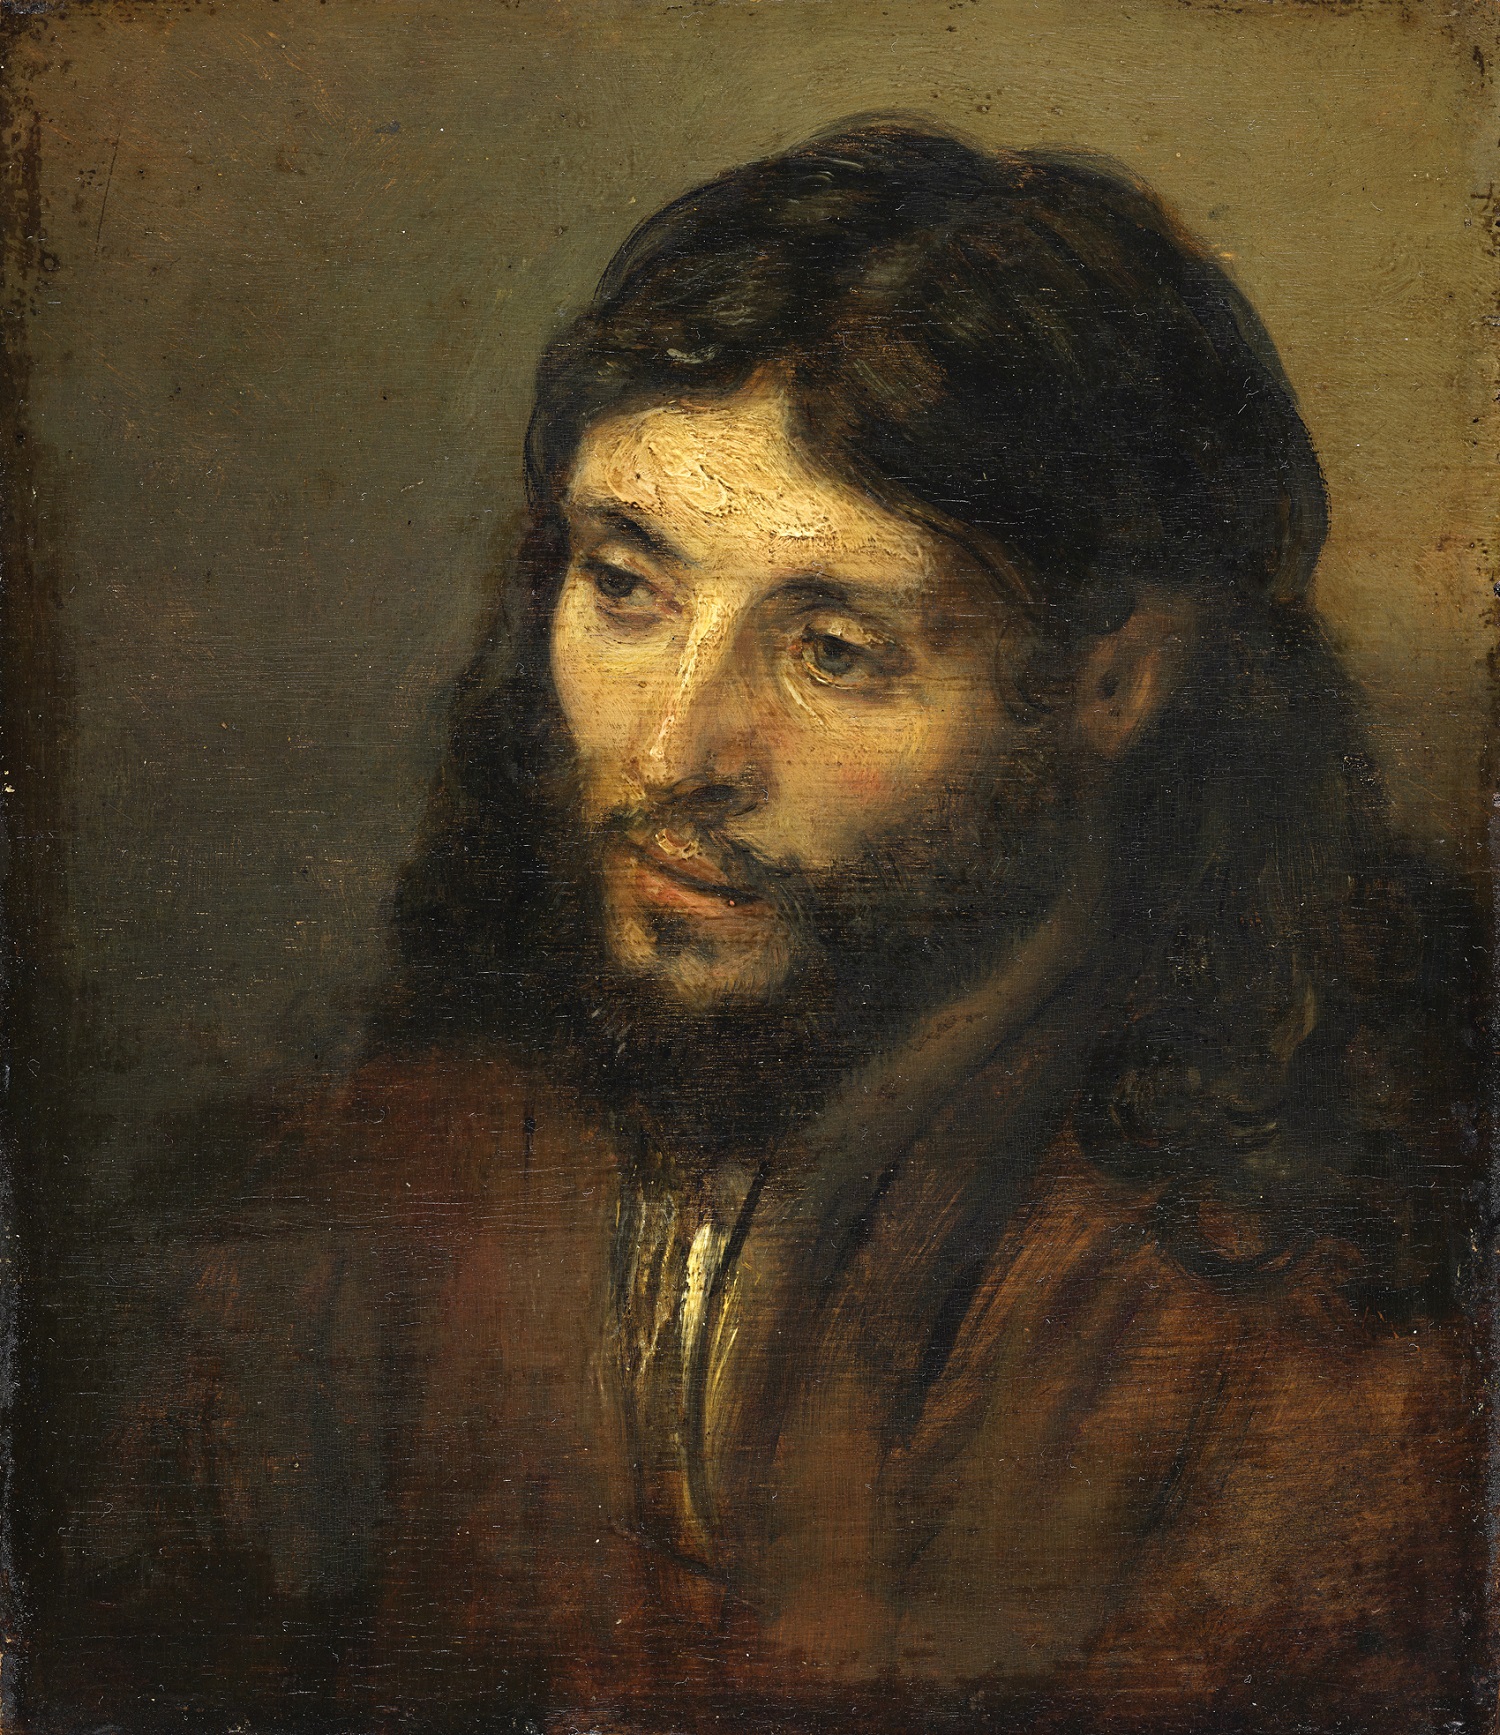 Head of Christ - Rembrandt (c. 1640)